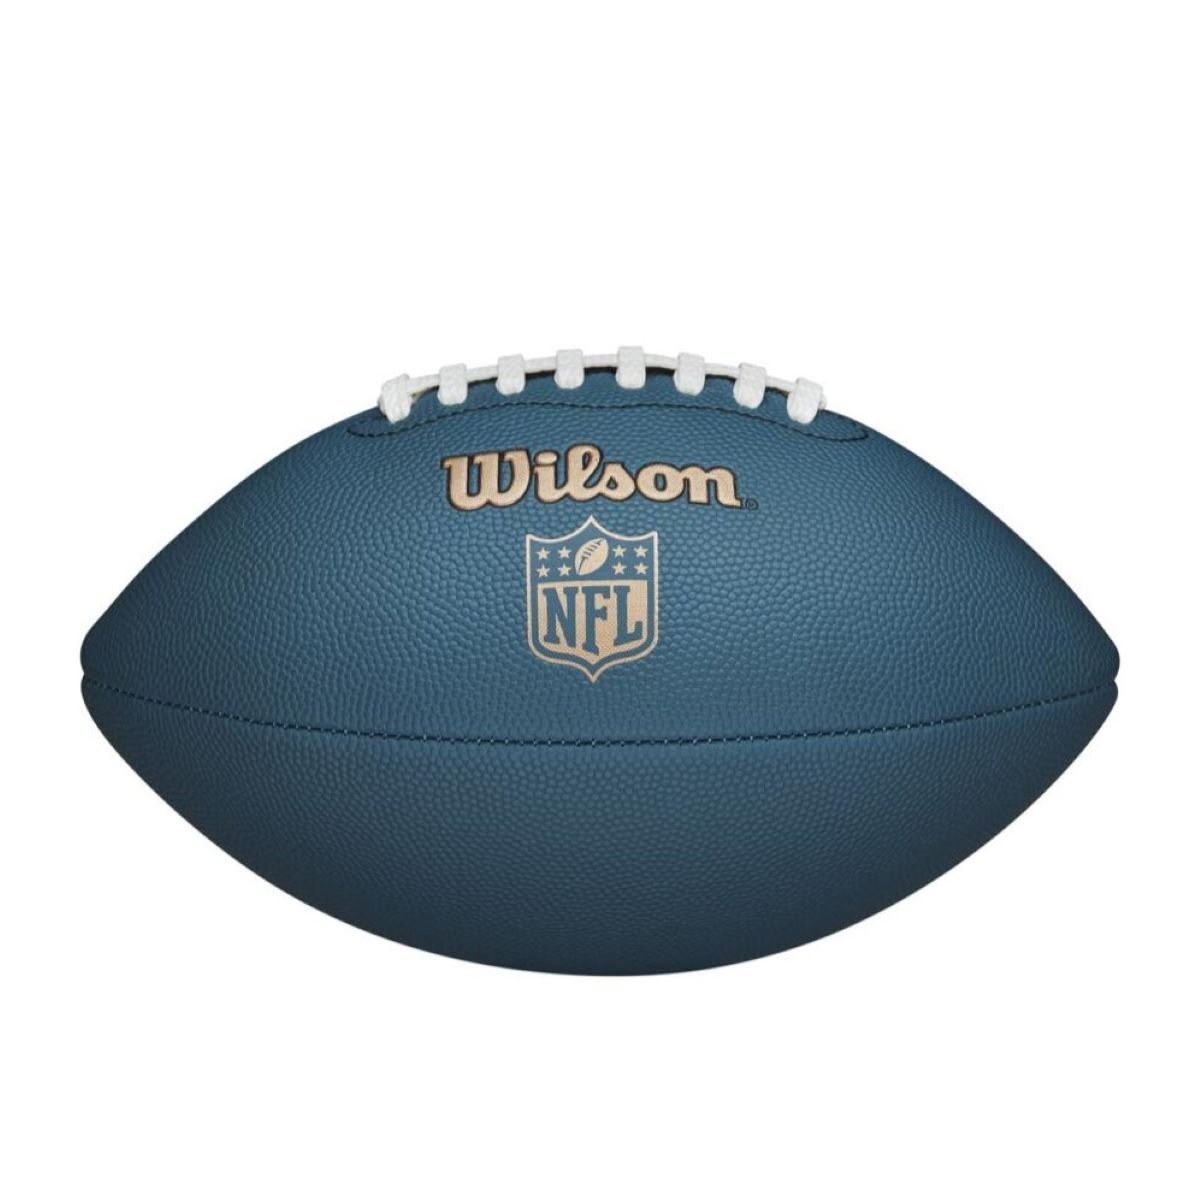 Lopta Wilson NFL Ignition - modrá